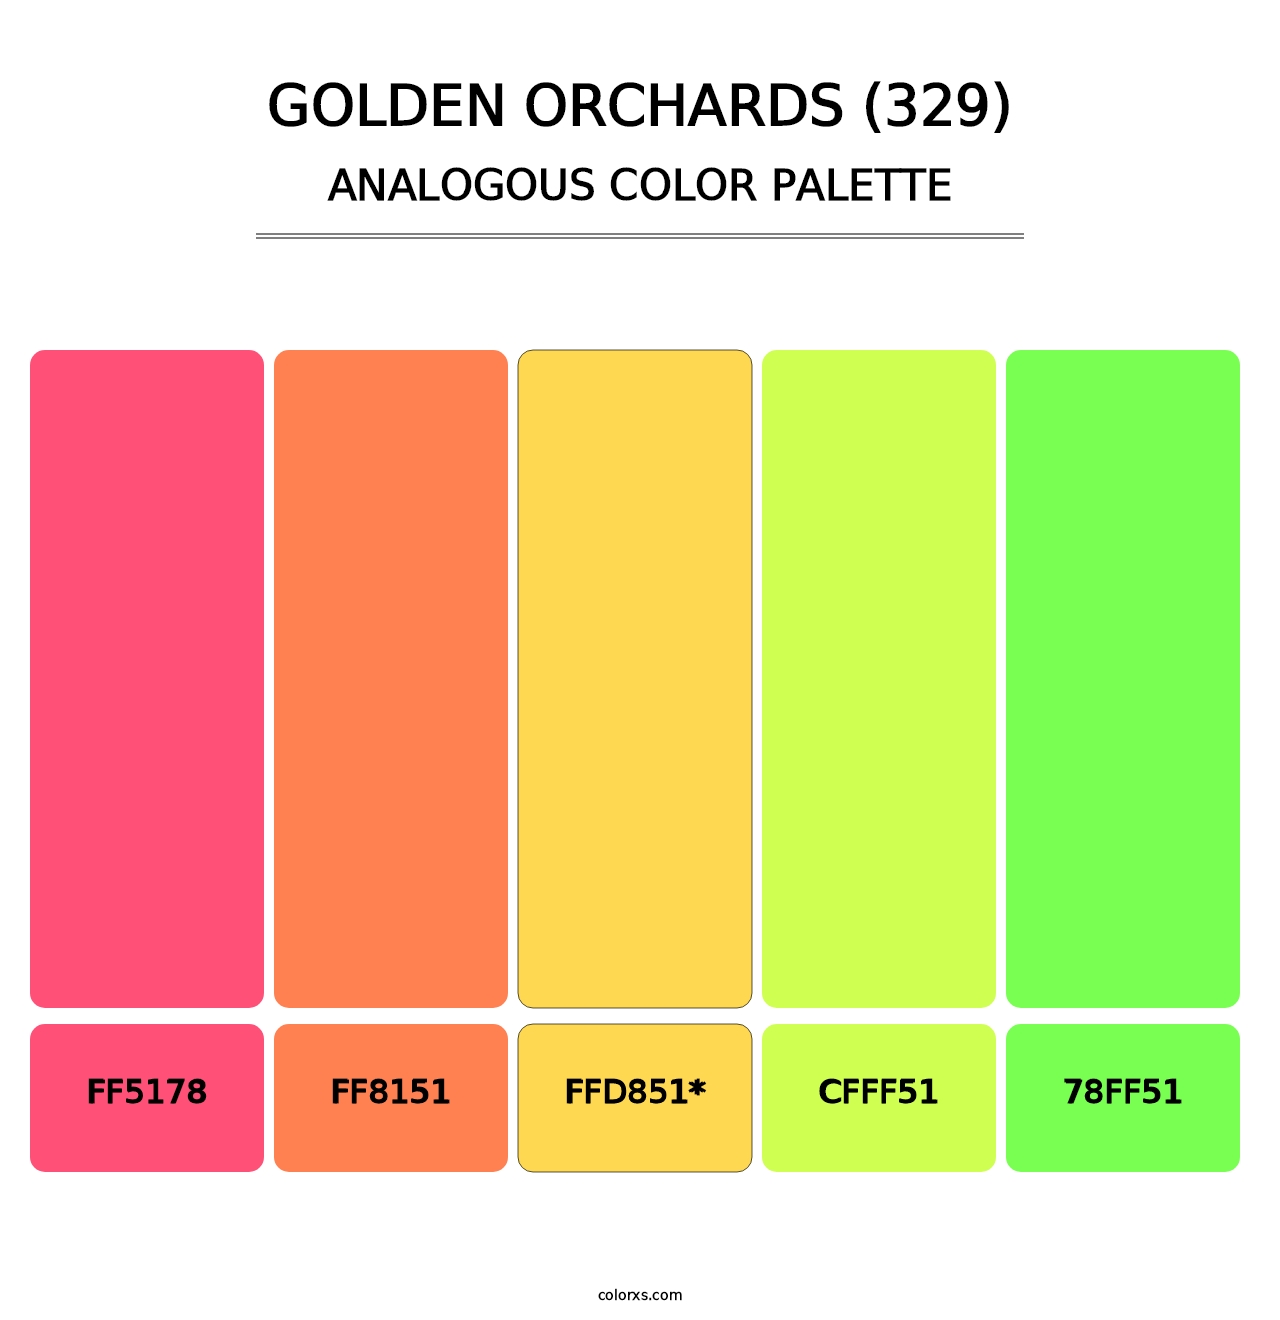 Golden Orchards (329) - Analogous Color Palette